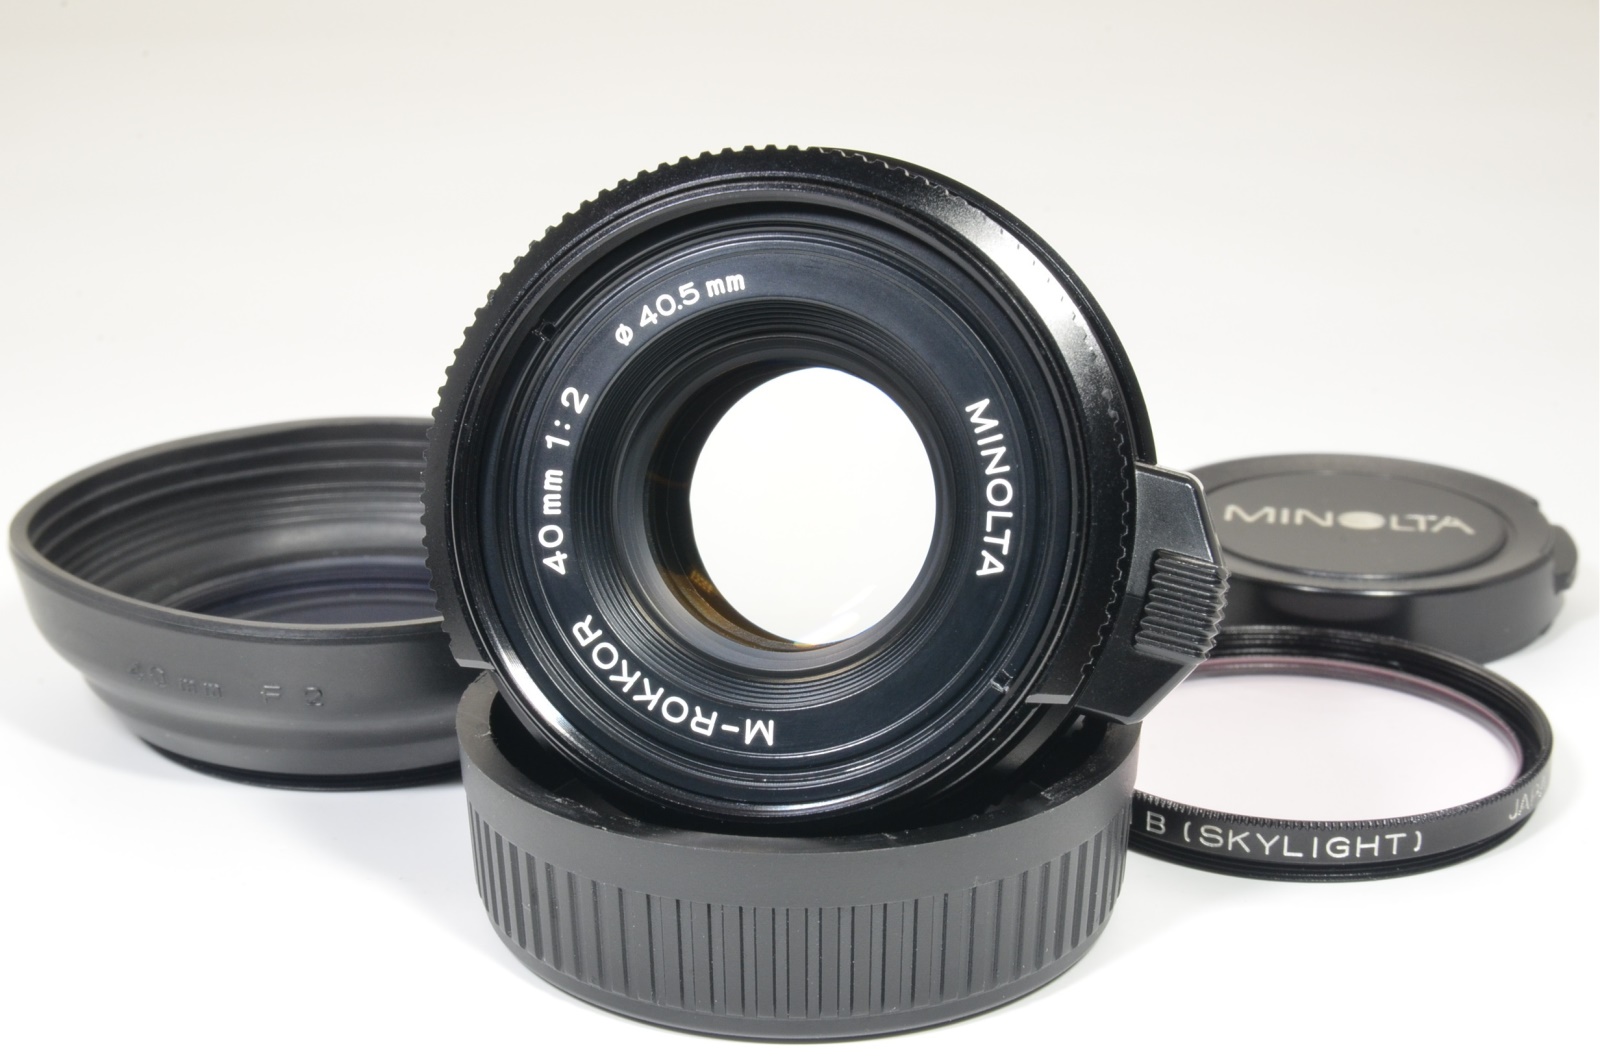 minolta cle film camera, m-rokkor lenses 40mm, 90mm, flash, grip shooting tested